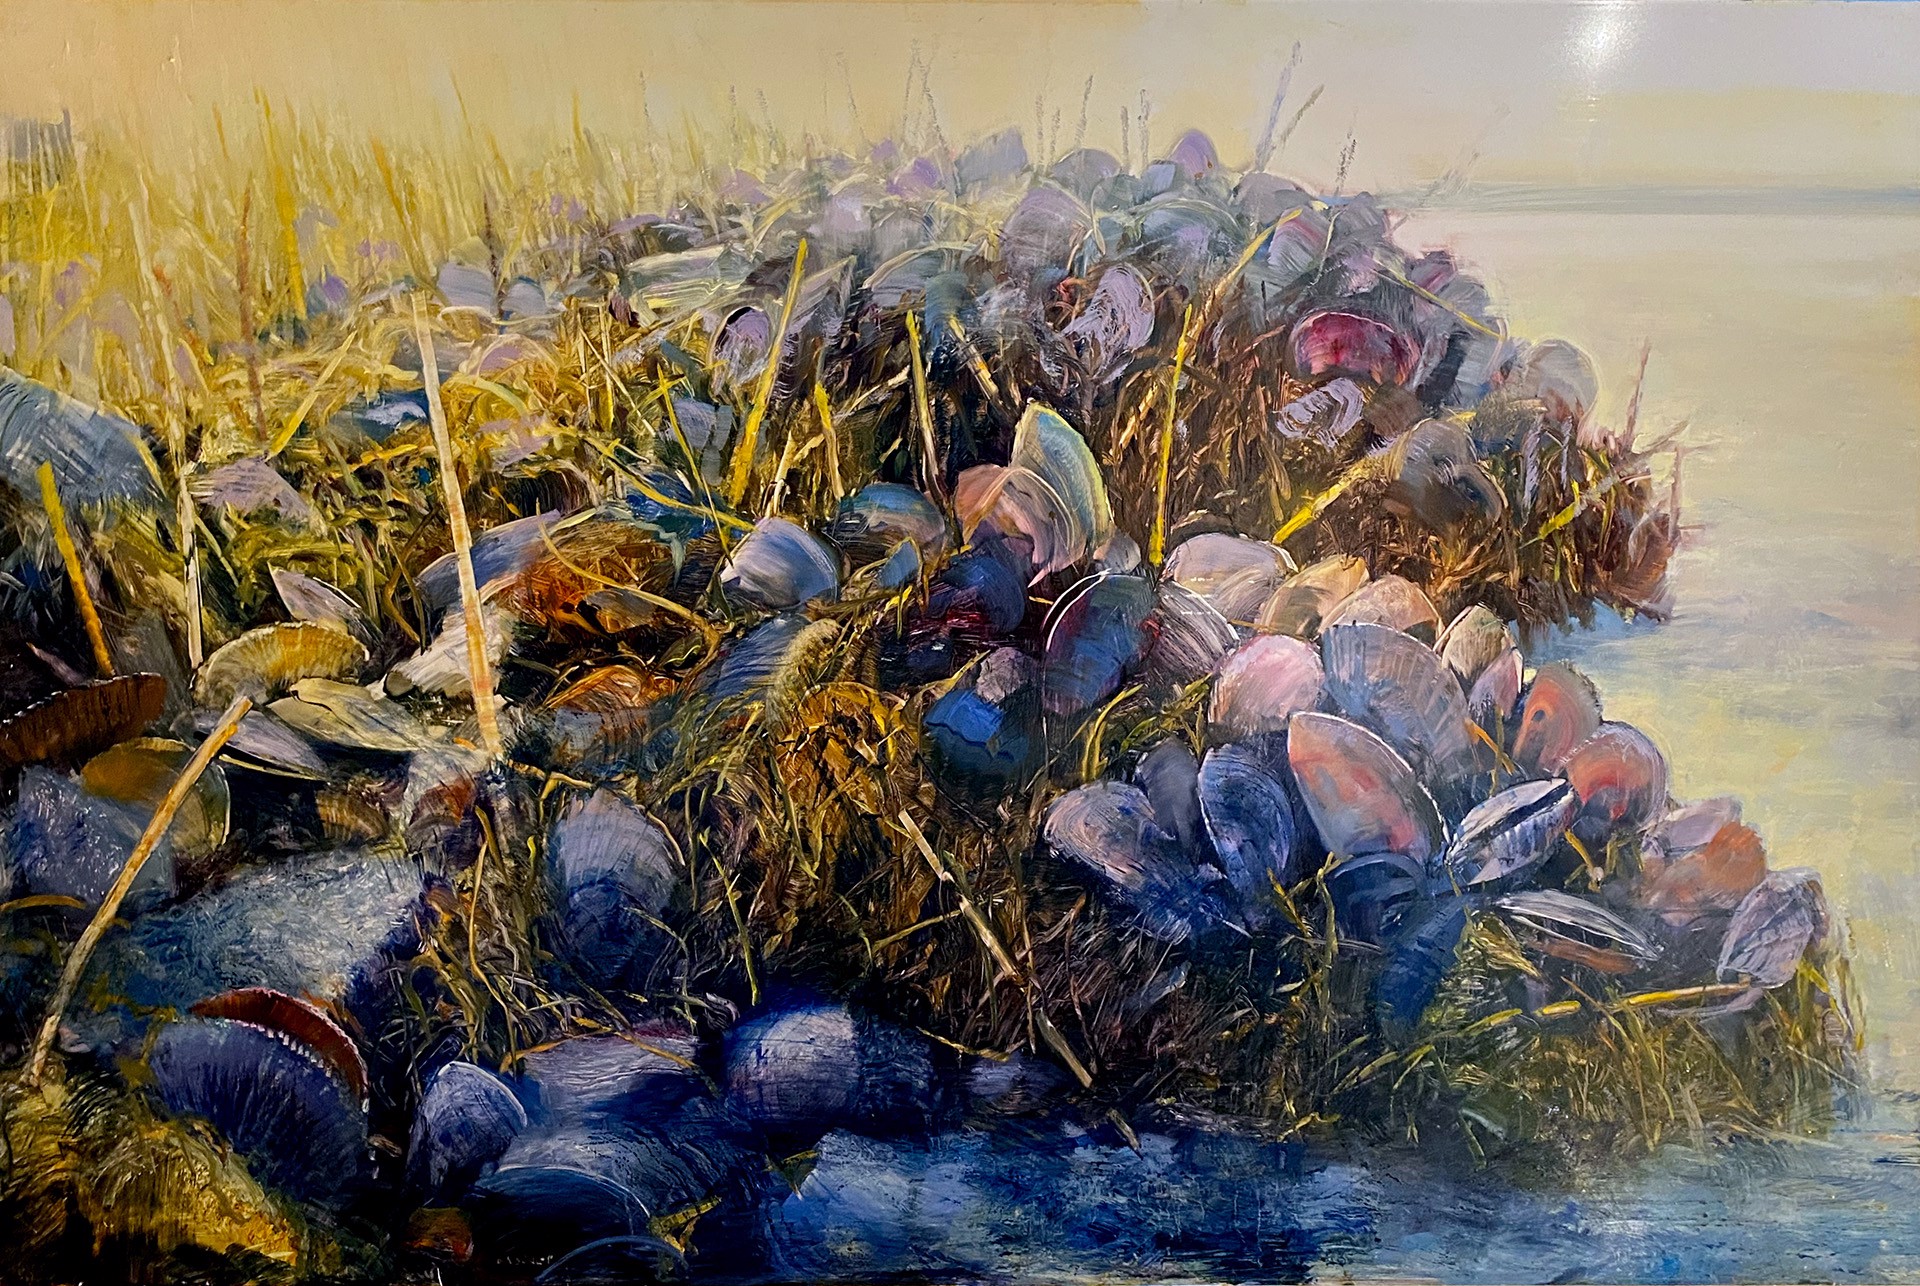 Mussels at Low-Tide by David Allen Dunlop